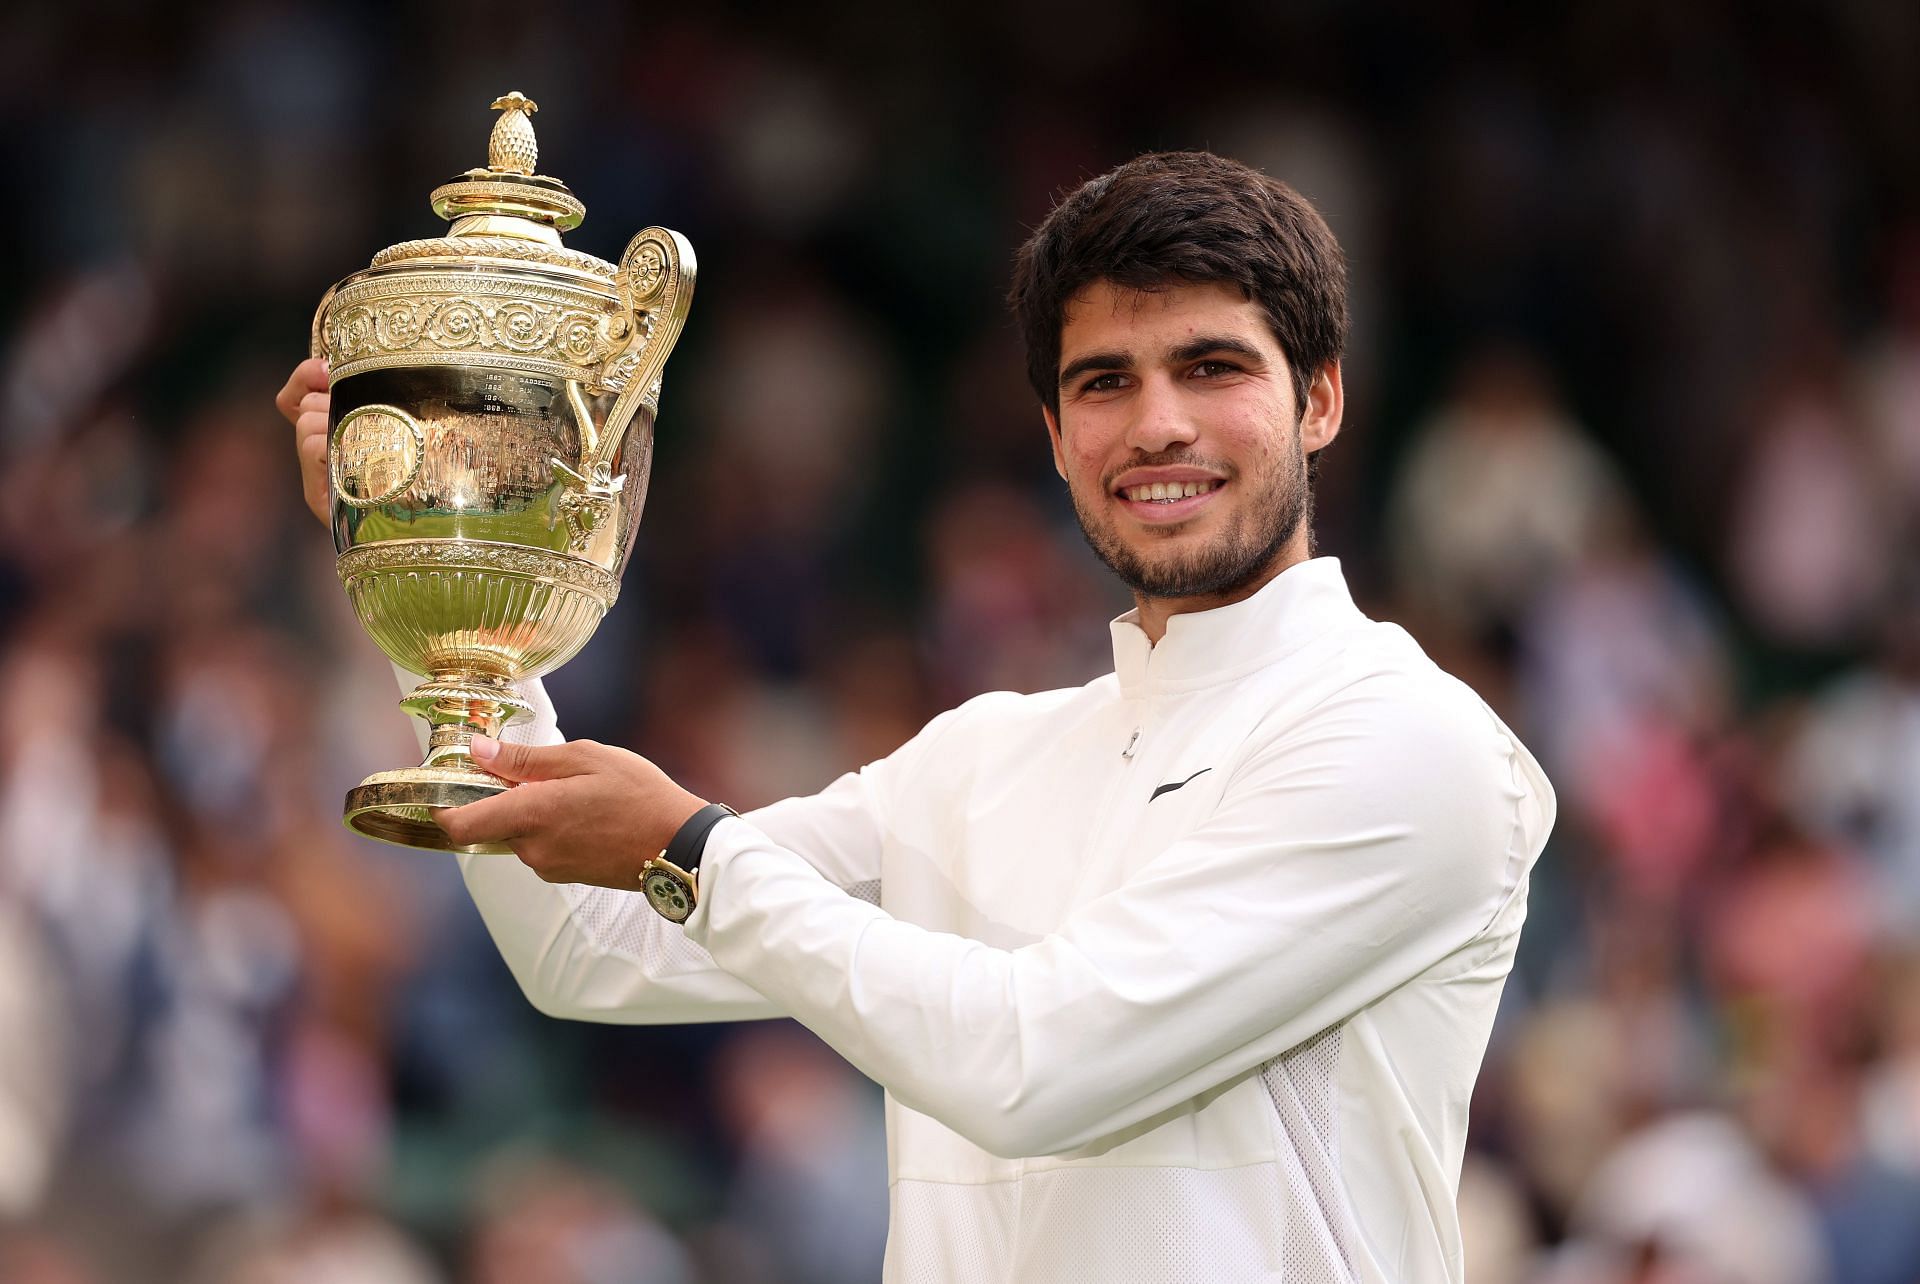 Carlos Alcaraz won the Wimbledon 2023 title